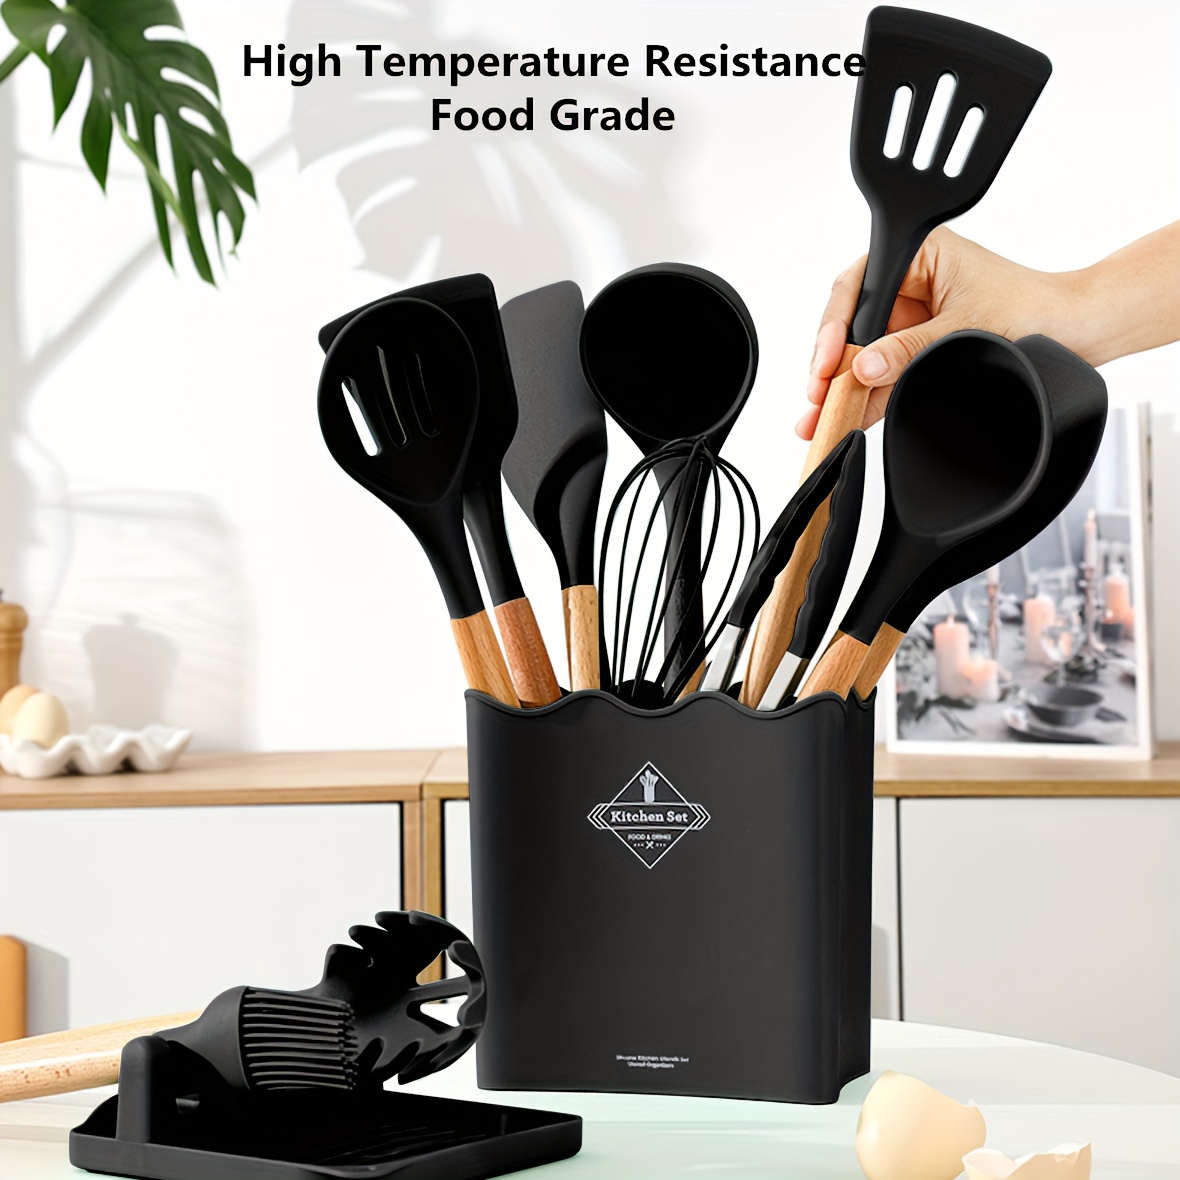 Dishwasher Safe Silicone Cooking Utensils - Heat Resistant Kitchen Utensil  Set w